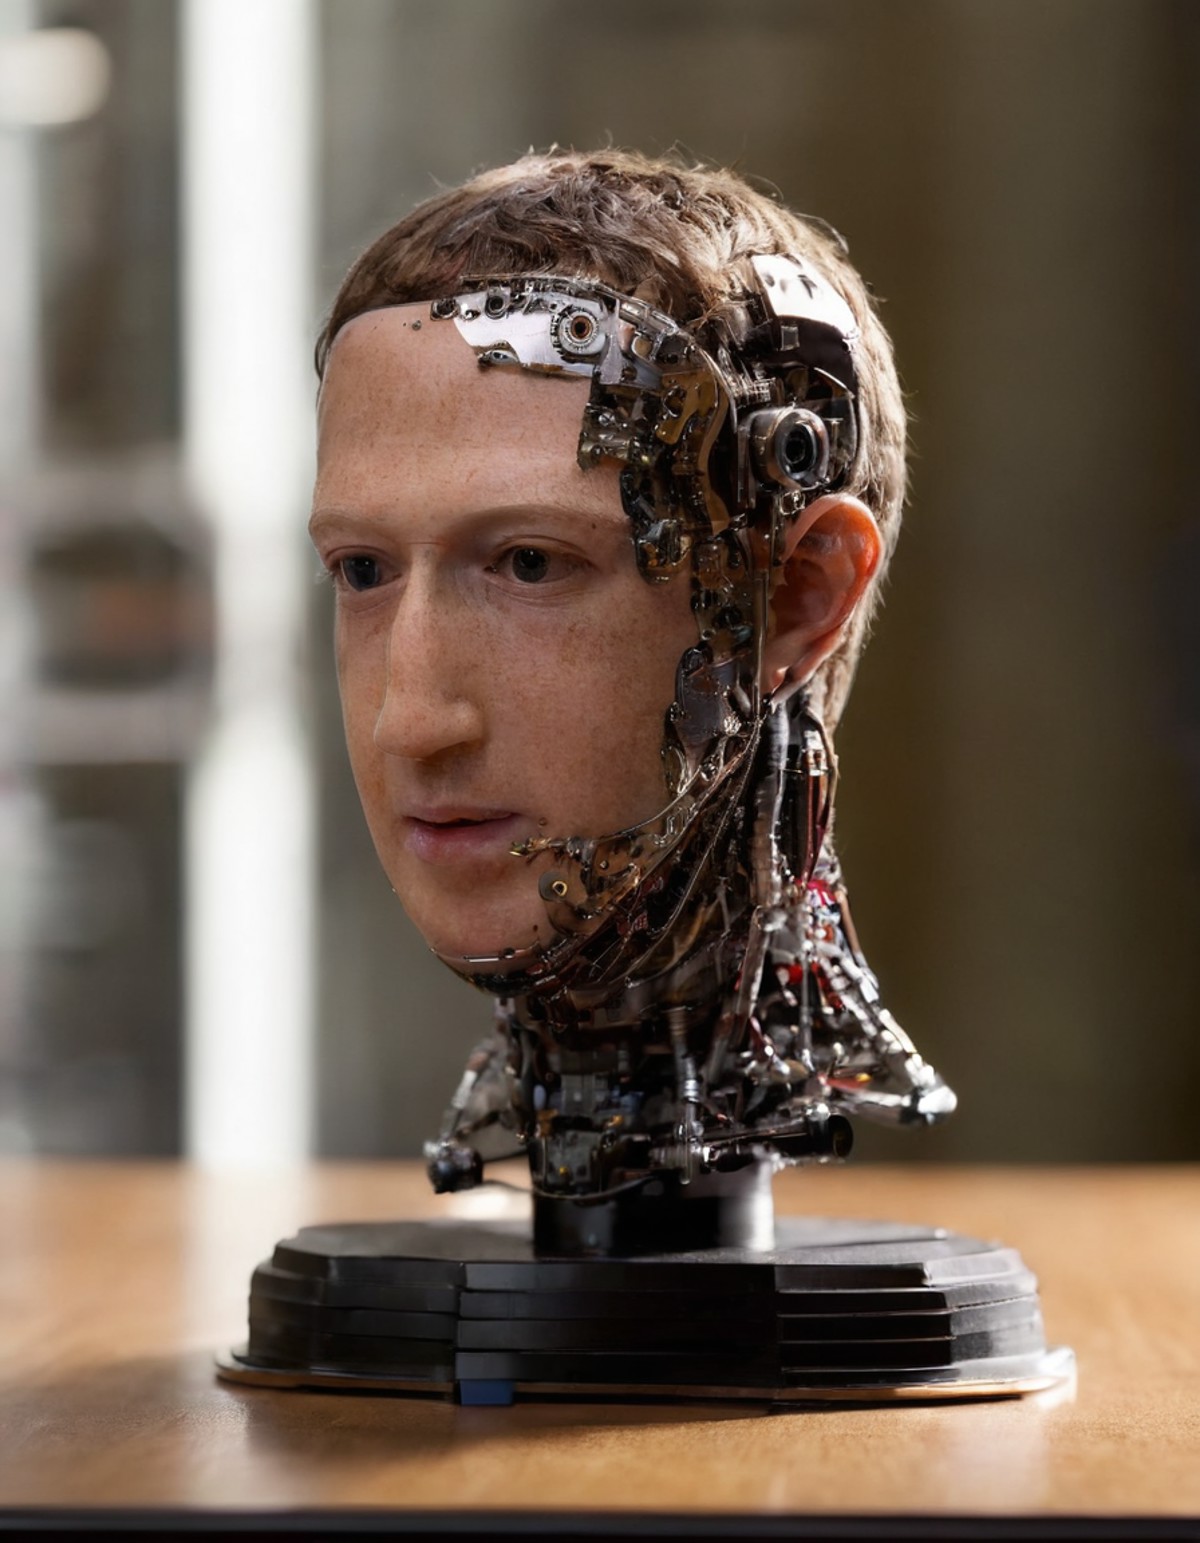 Hasselblad, fujifilm DSLR photo from above of (ohwx man, Mark Zuckerberg cyborg detached head on a tabletop stand, skin, b...